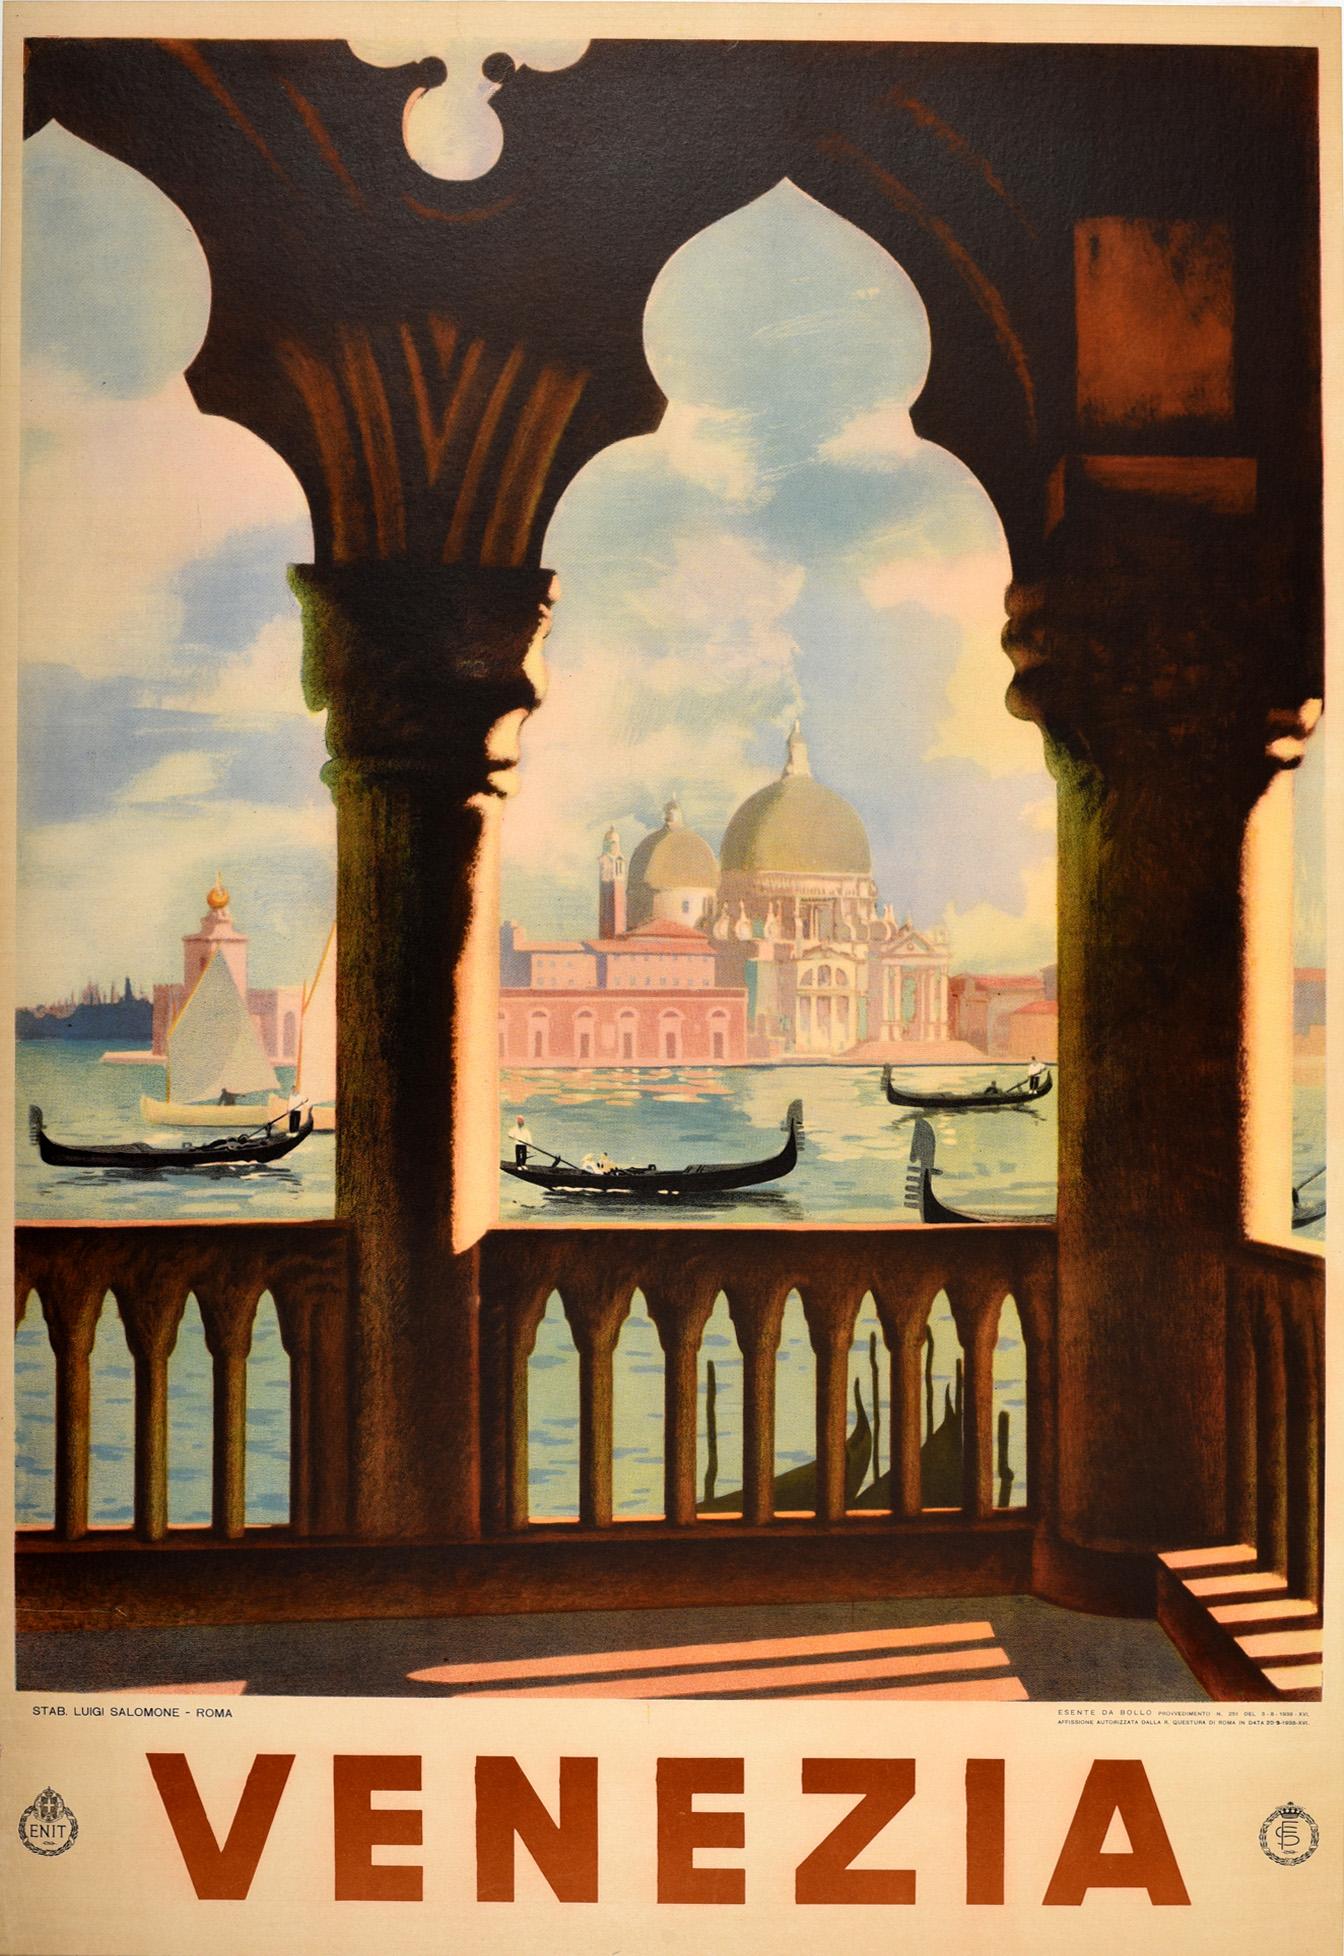 Luigi Salomone Print - Original Vintage Poster Venezia Venice Italy Canal Gondola Basilica Palazzo ENIT